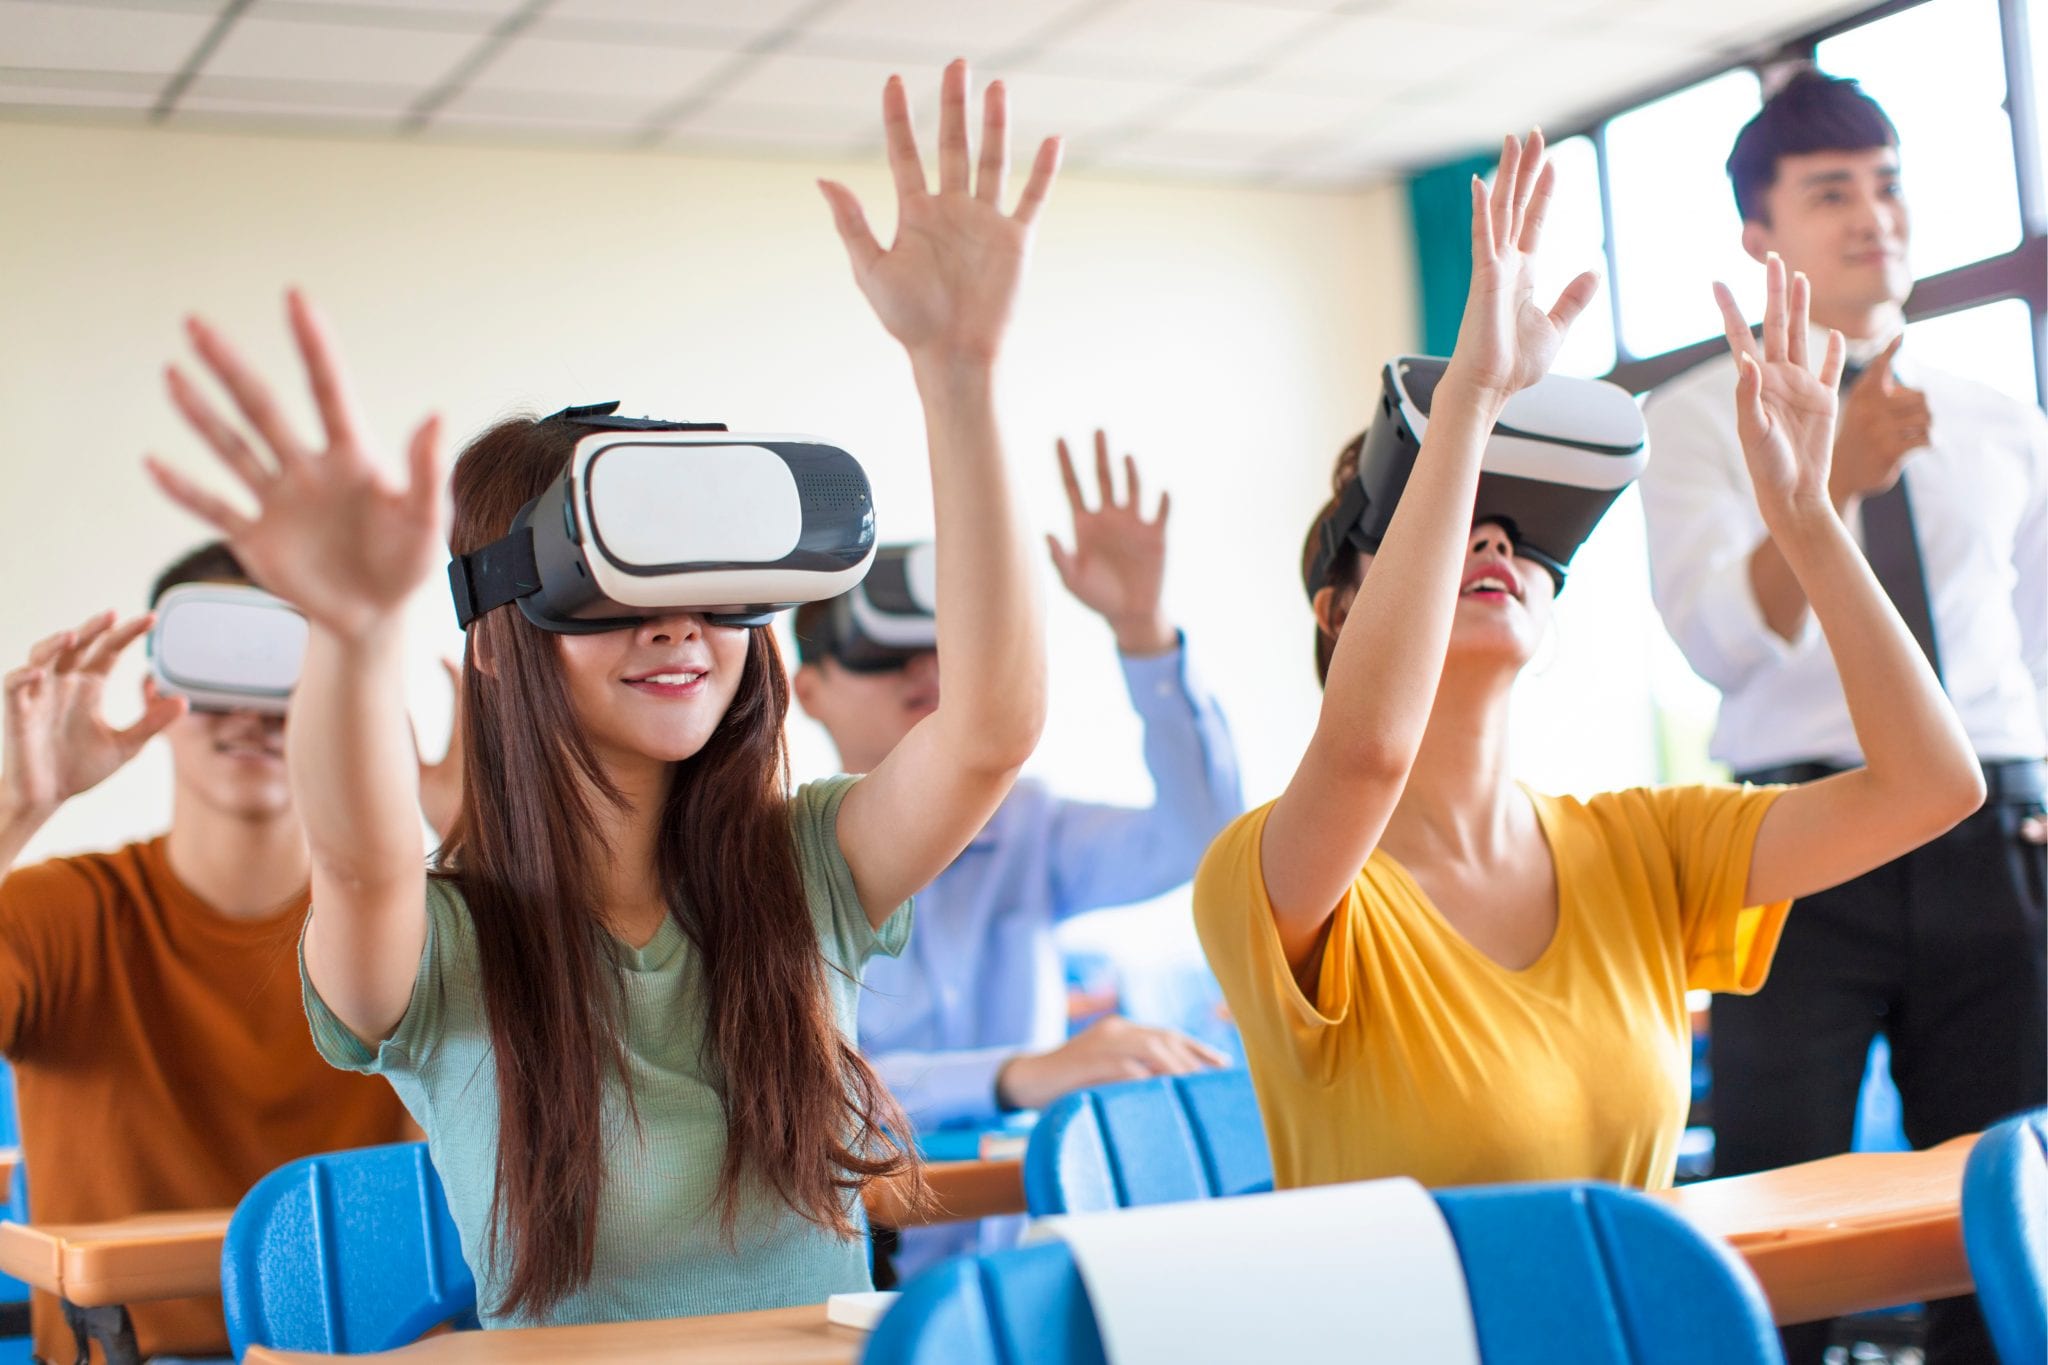 Utilizing virtual reality in education